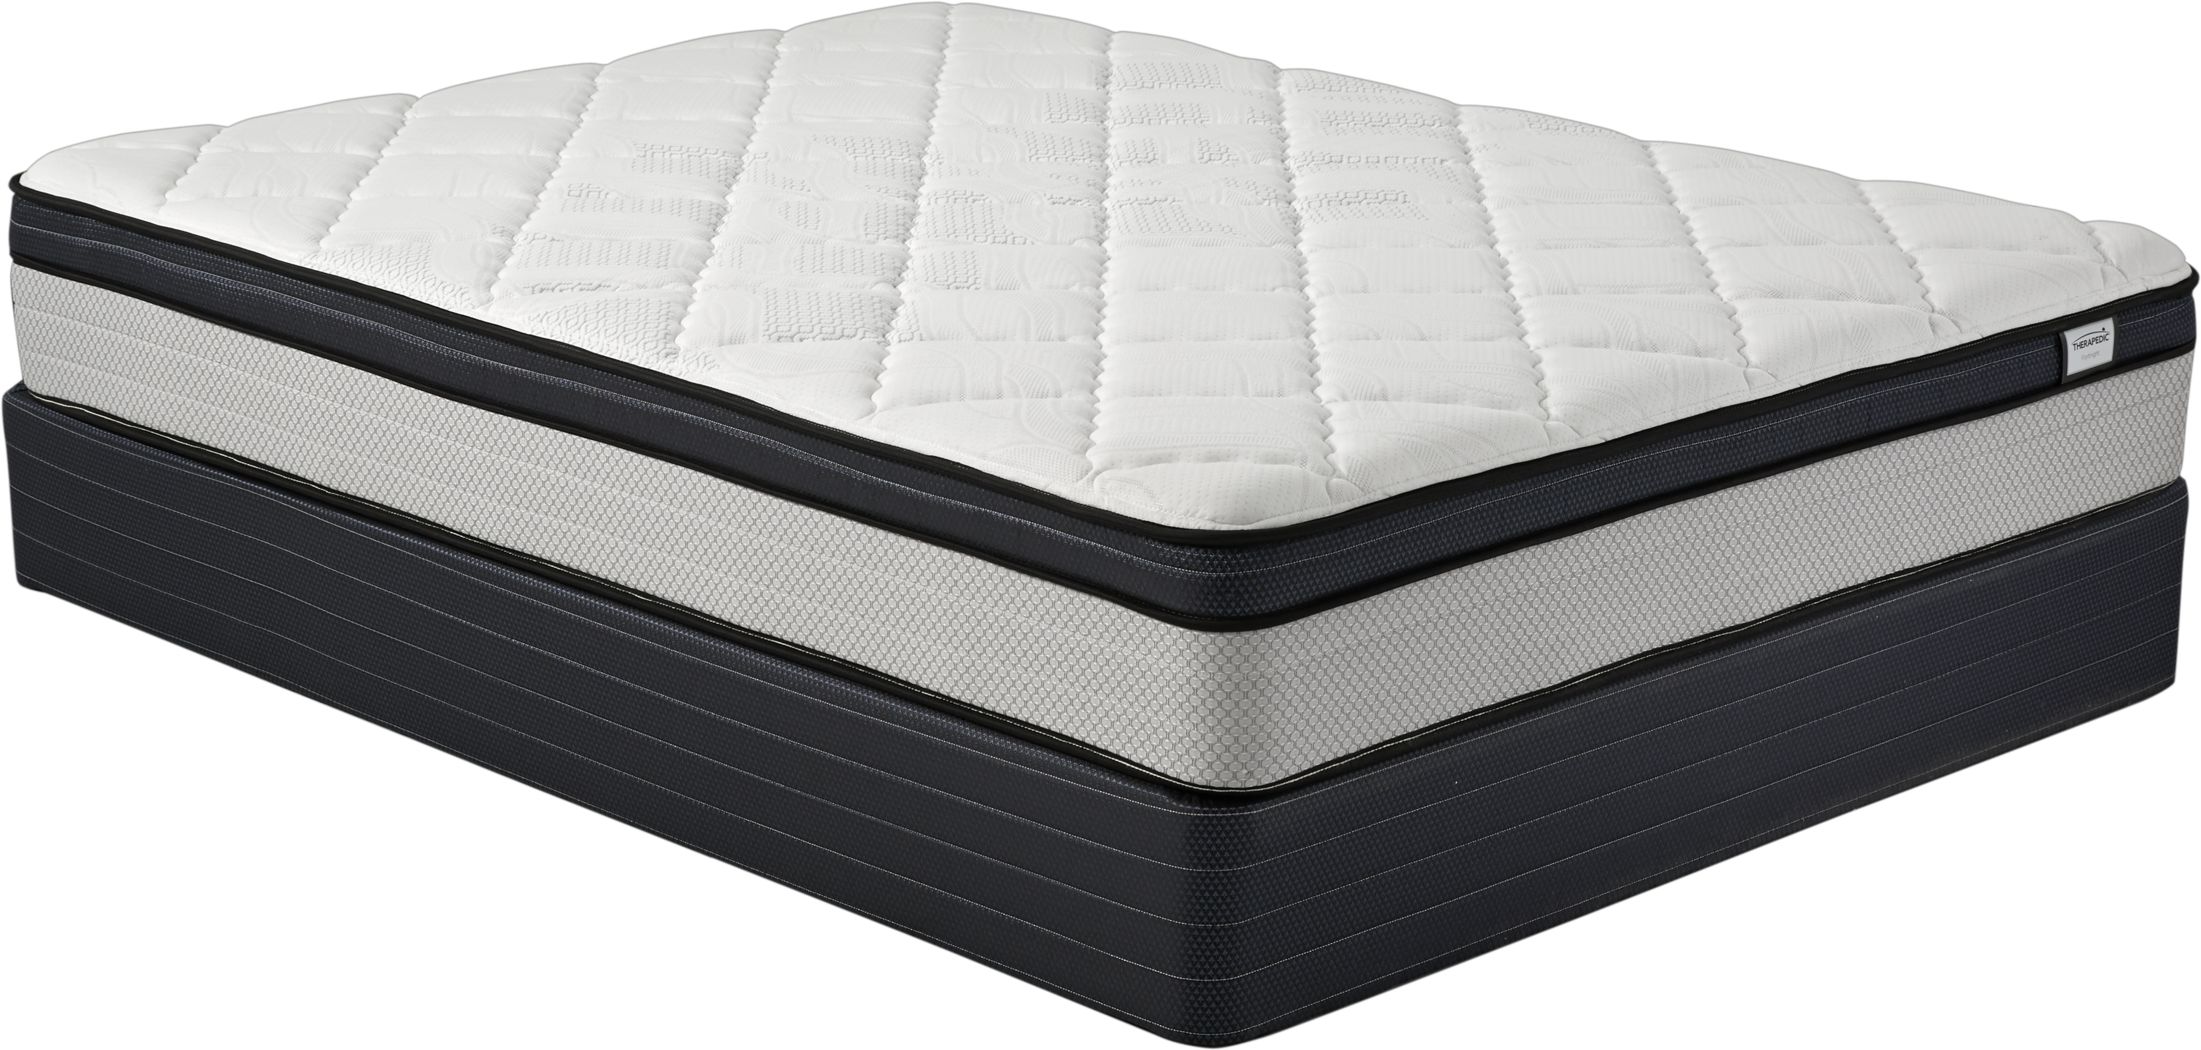 therapedic berkeley queen mattress set review